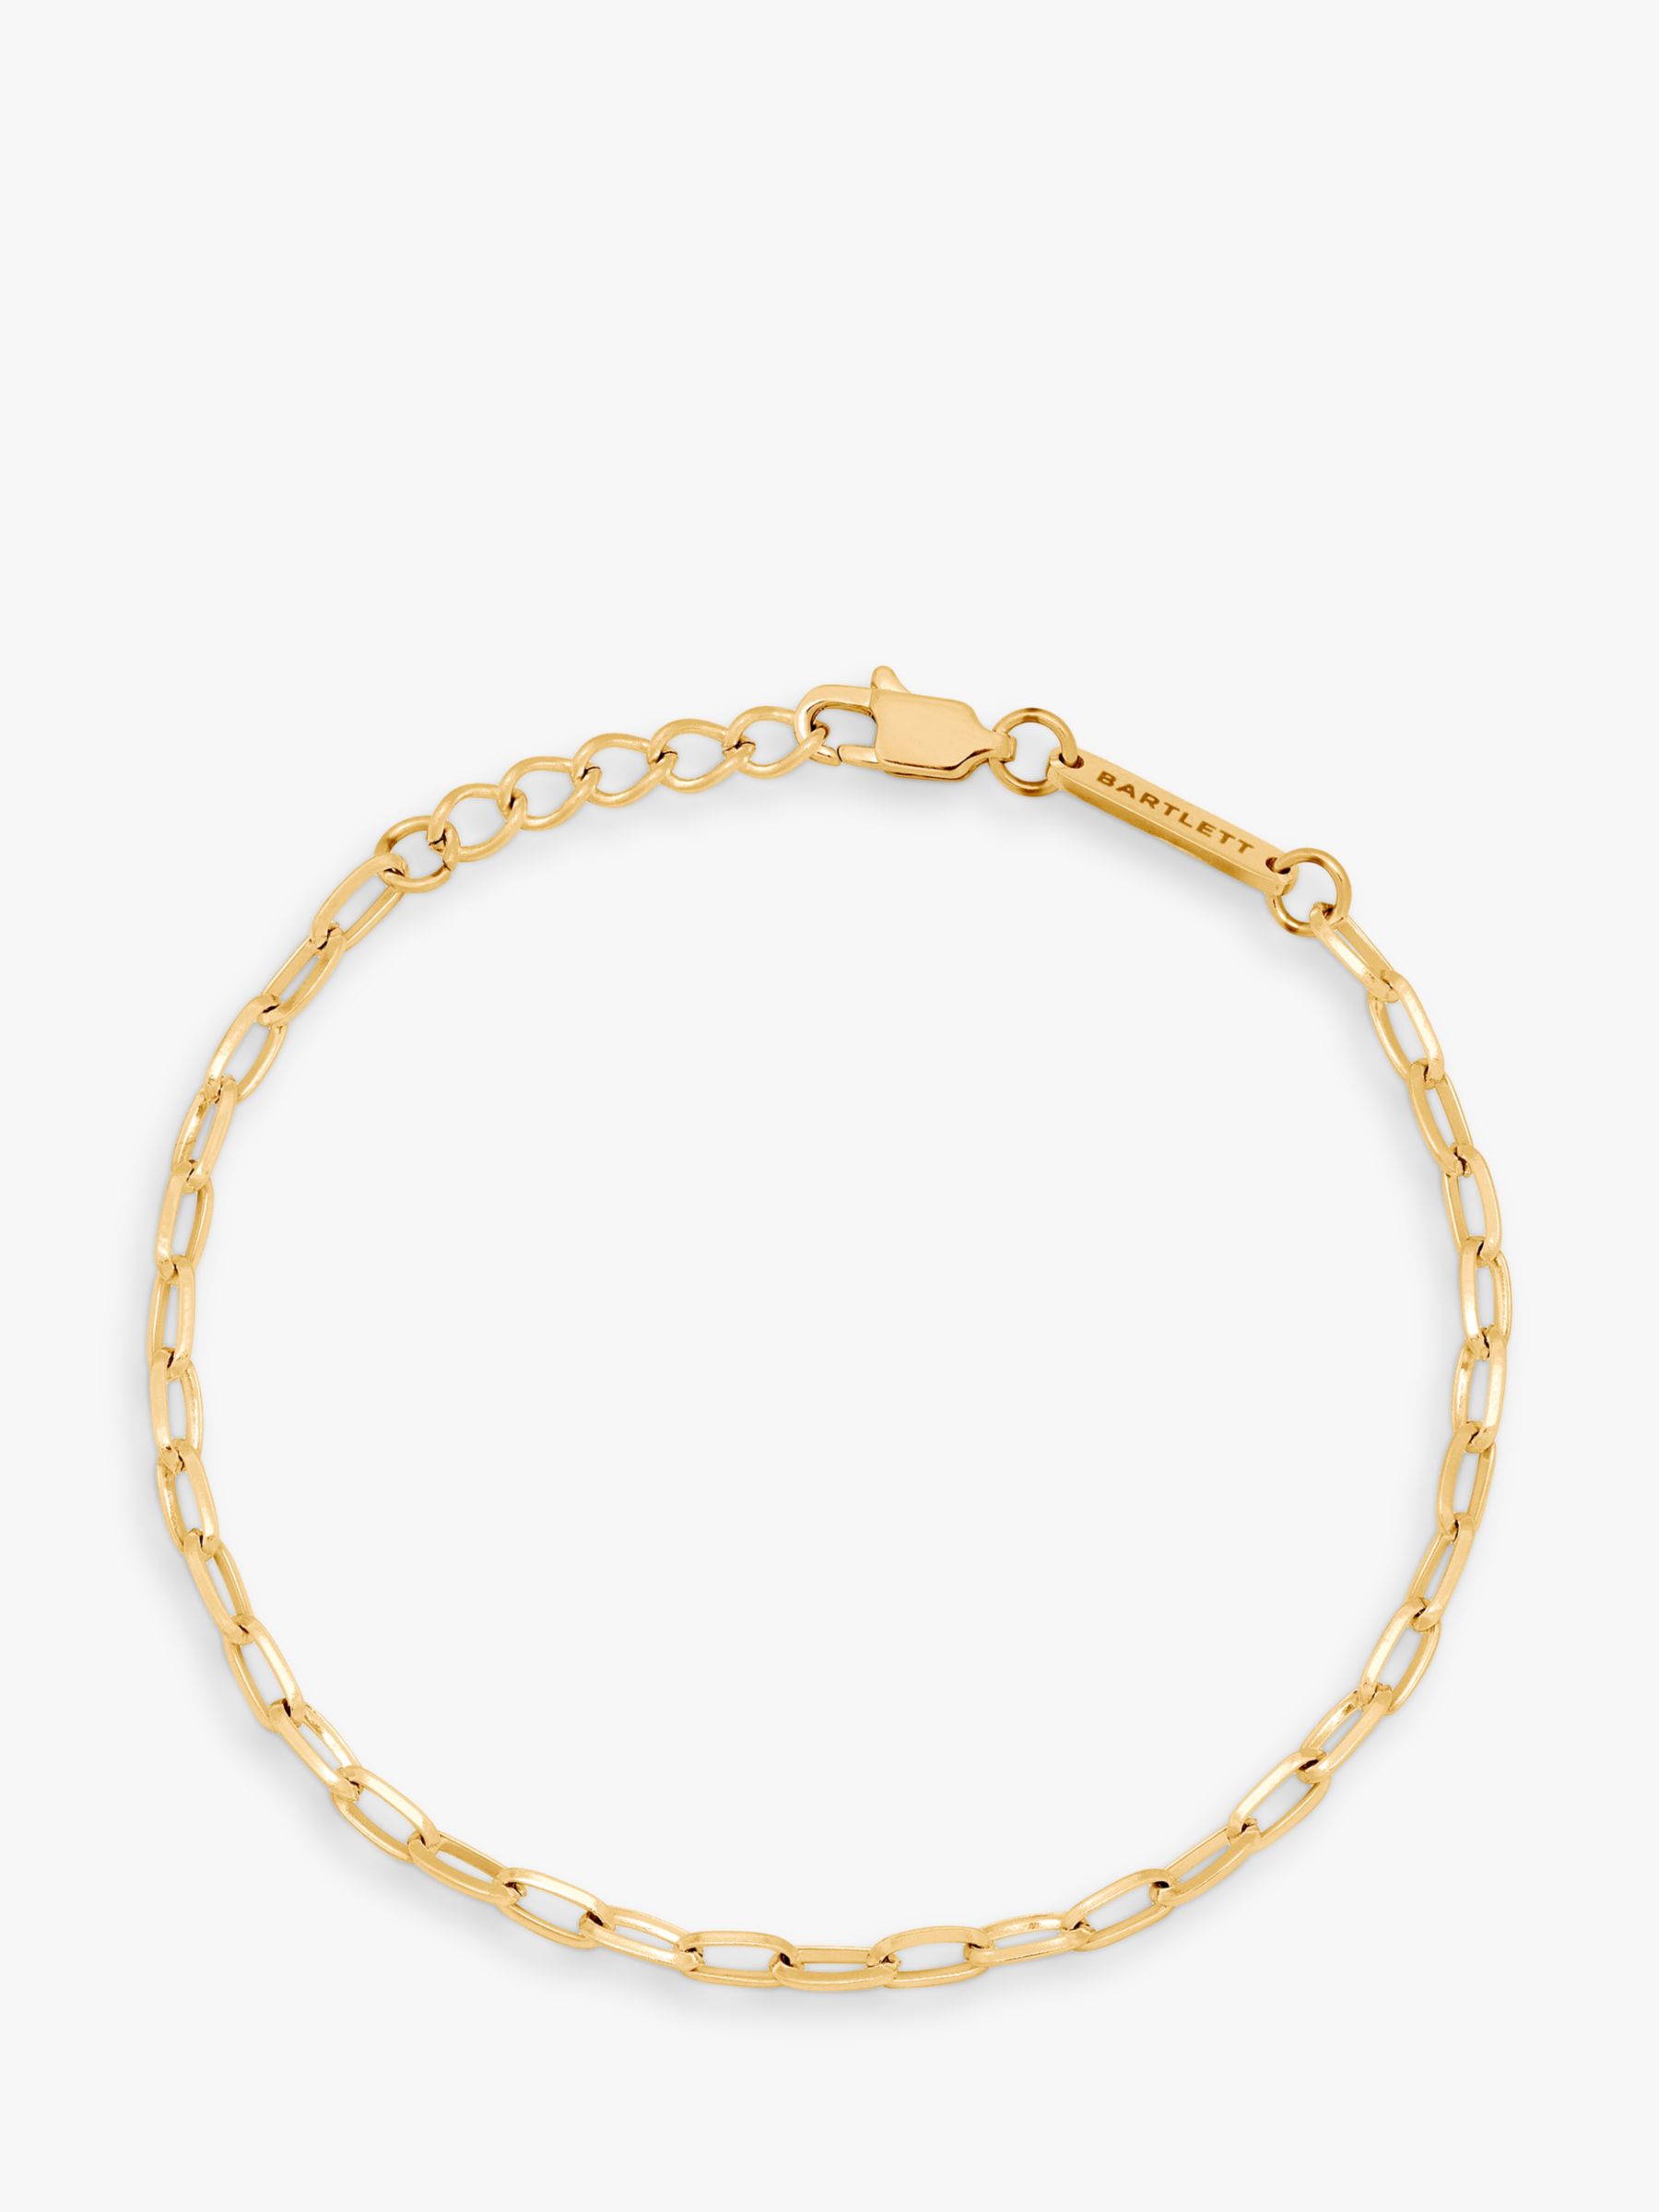 BARTLETT LONDON Men's Paperclip Chain Bracelet, Gold